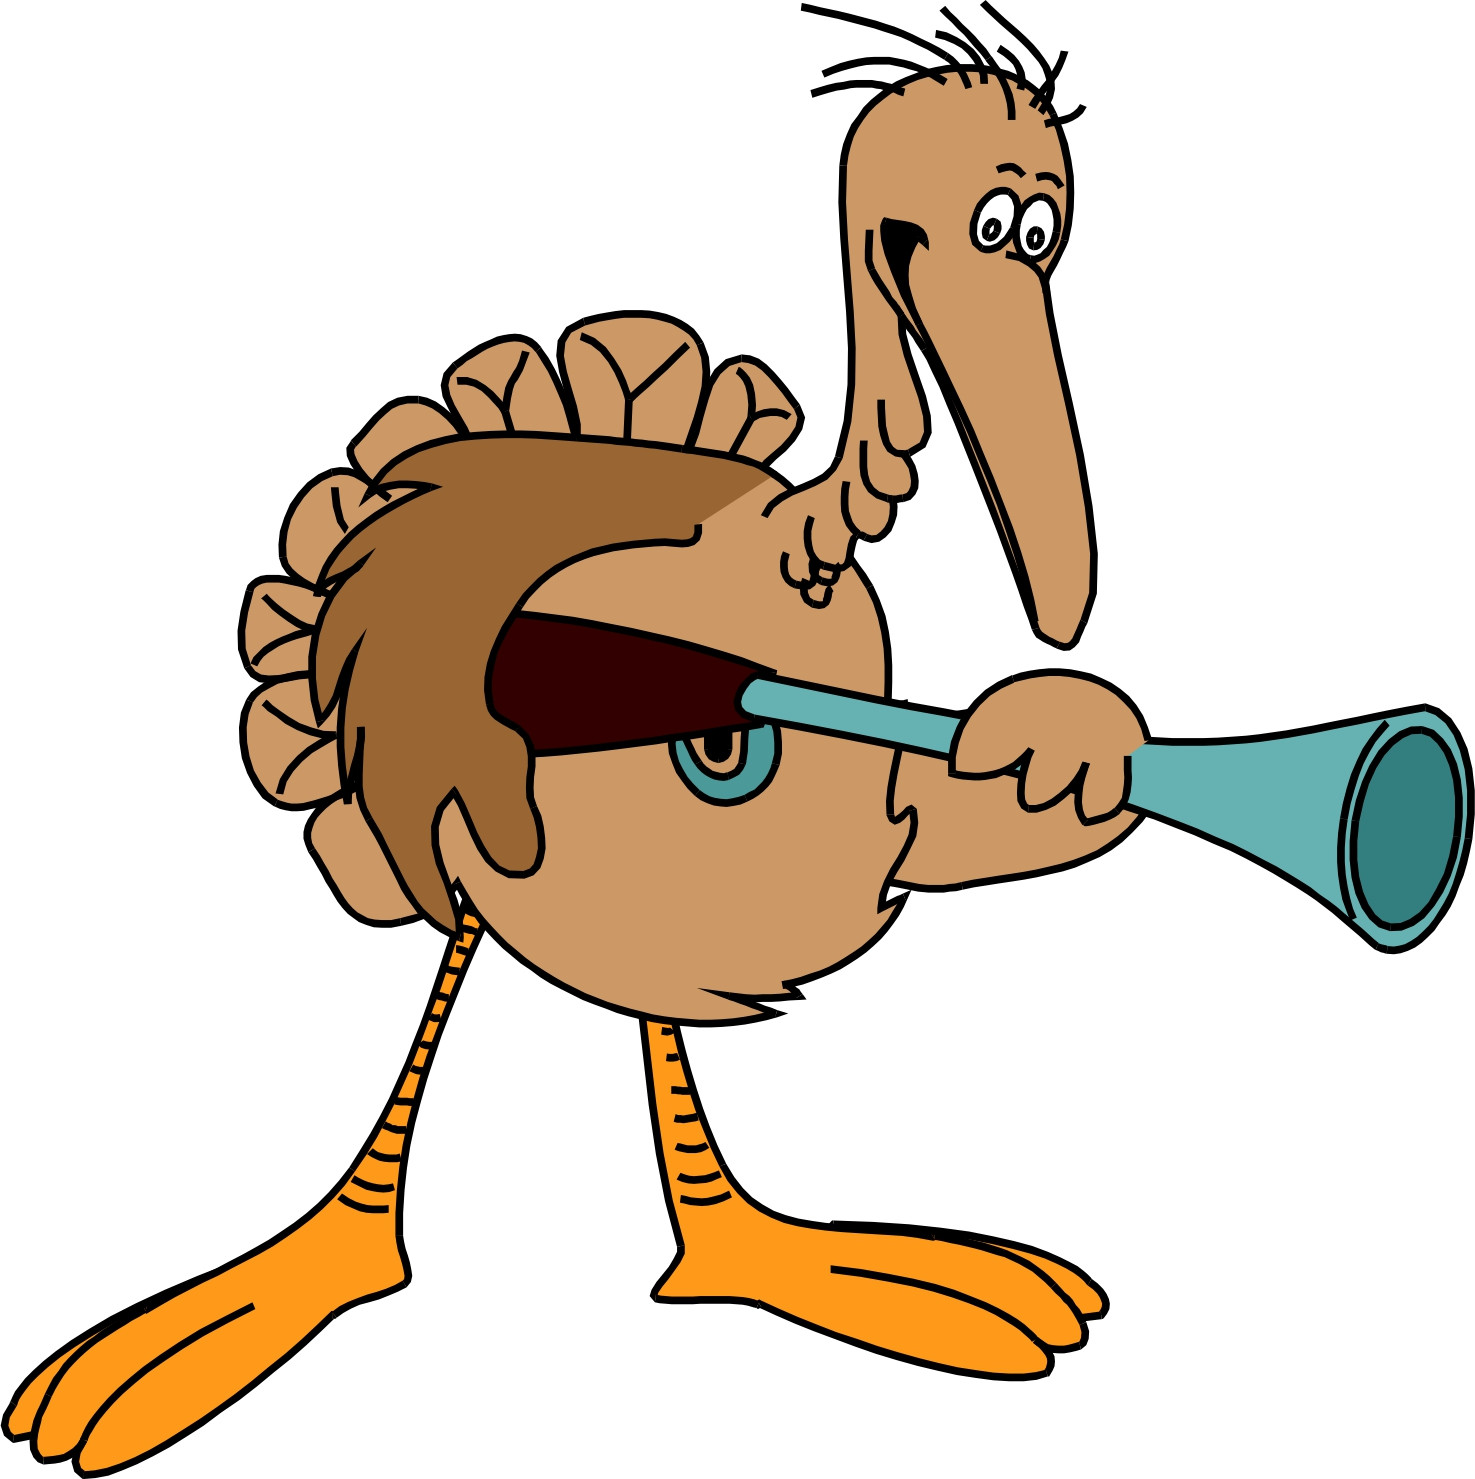 Animated Thanksgiving Turkey
 Turkey Animated Clip Art Cliparts